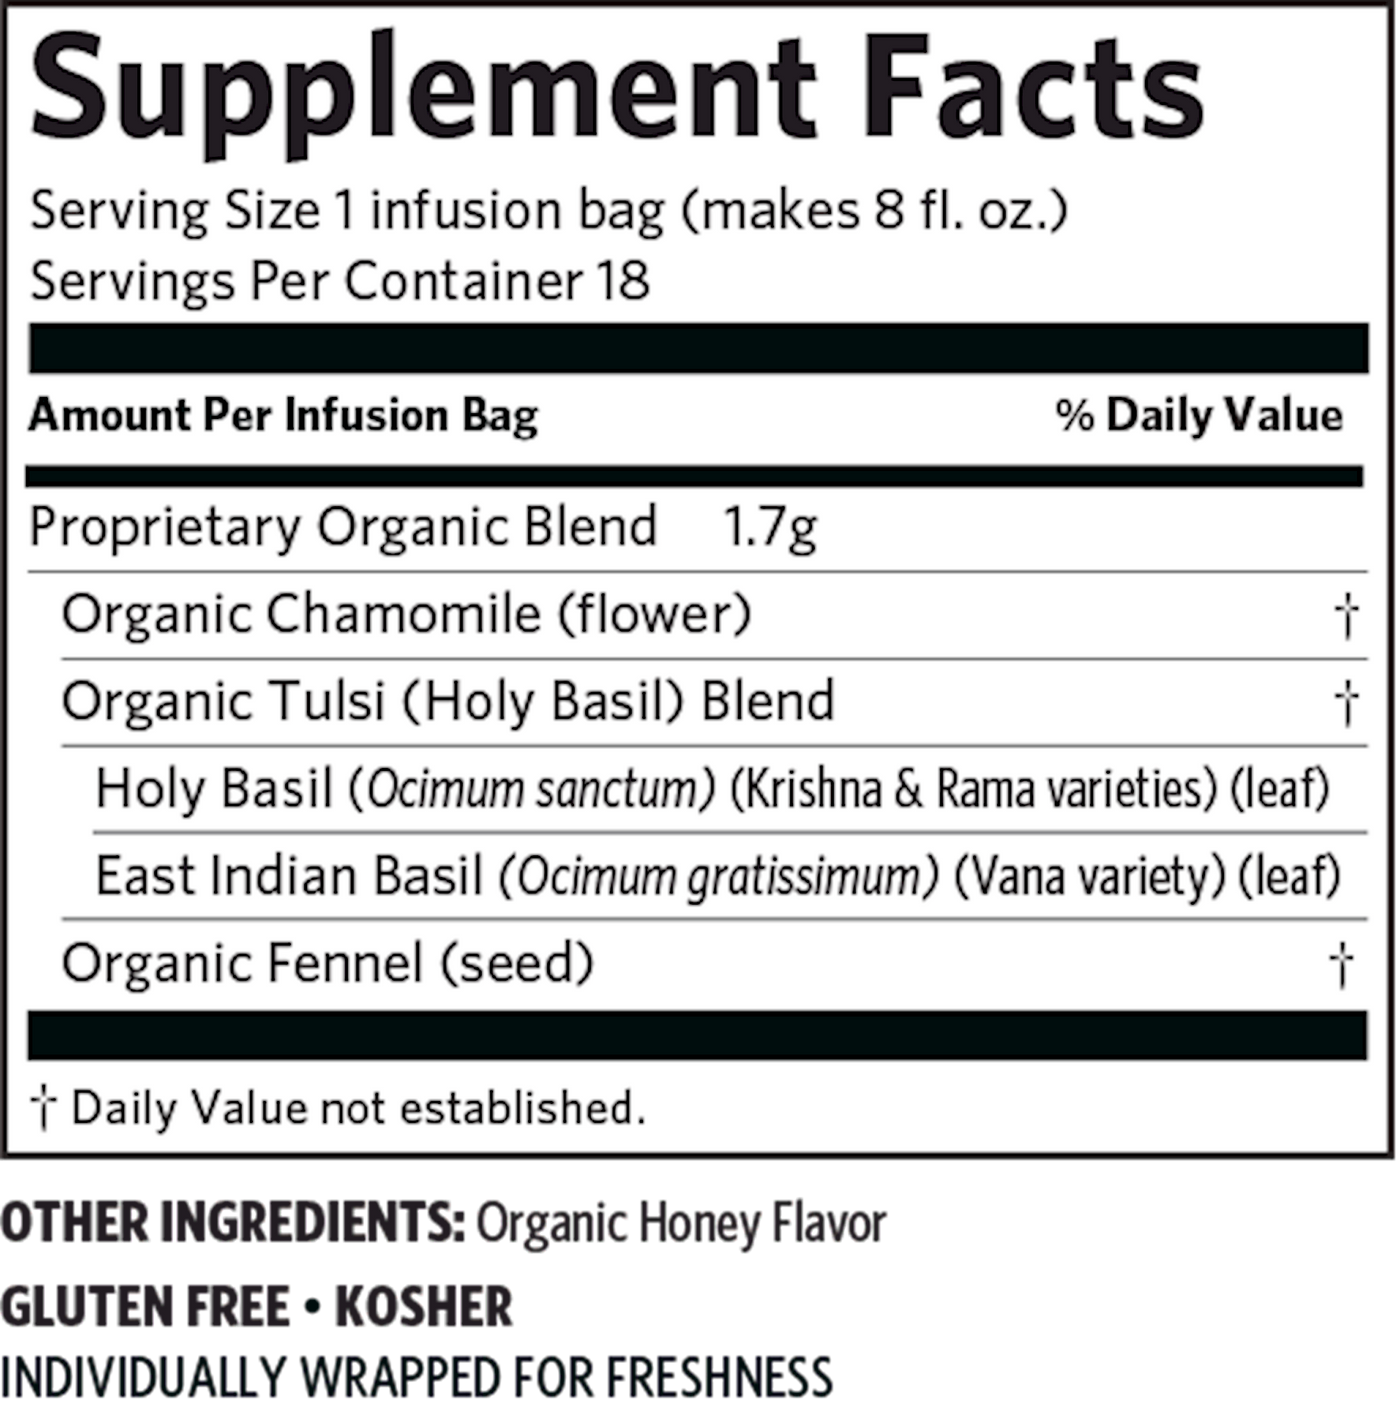 Tulsi Tea Honey Chamomile 18 bags Curated Wellness